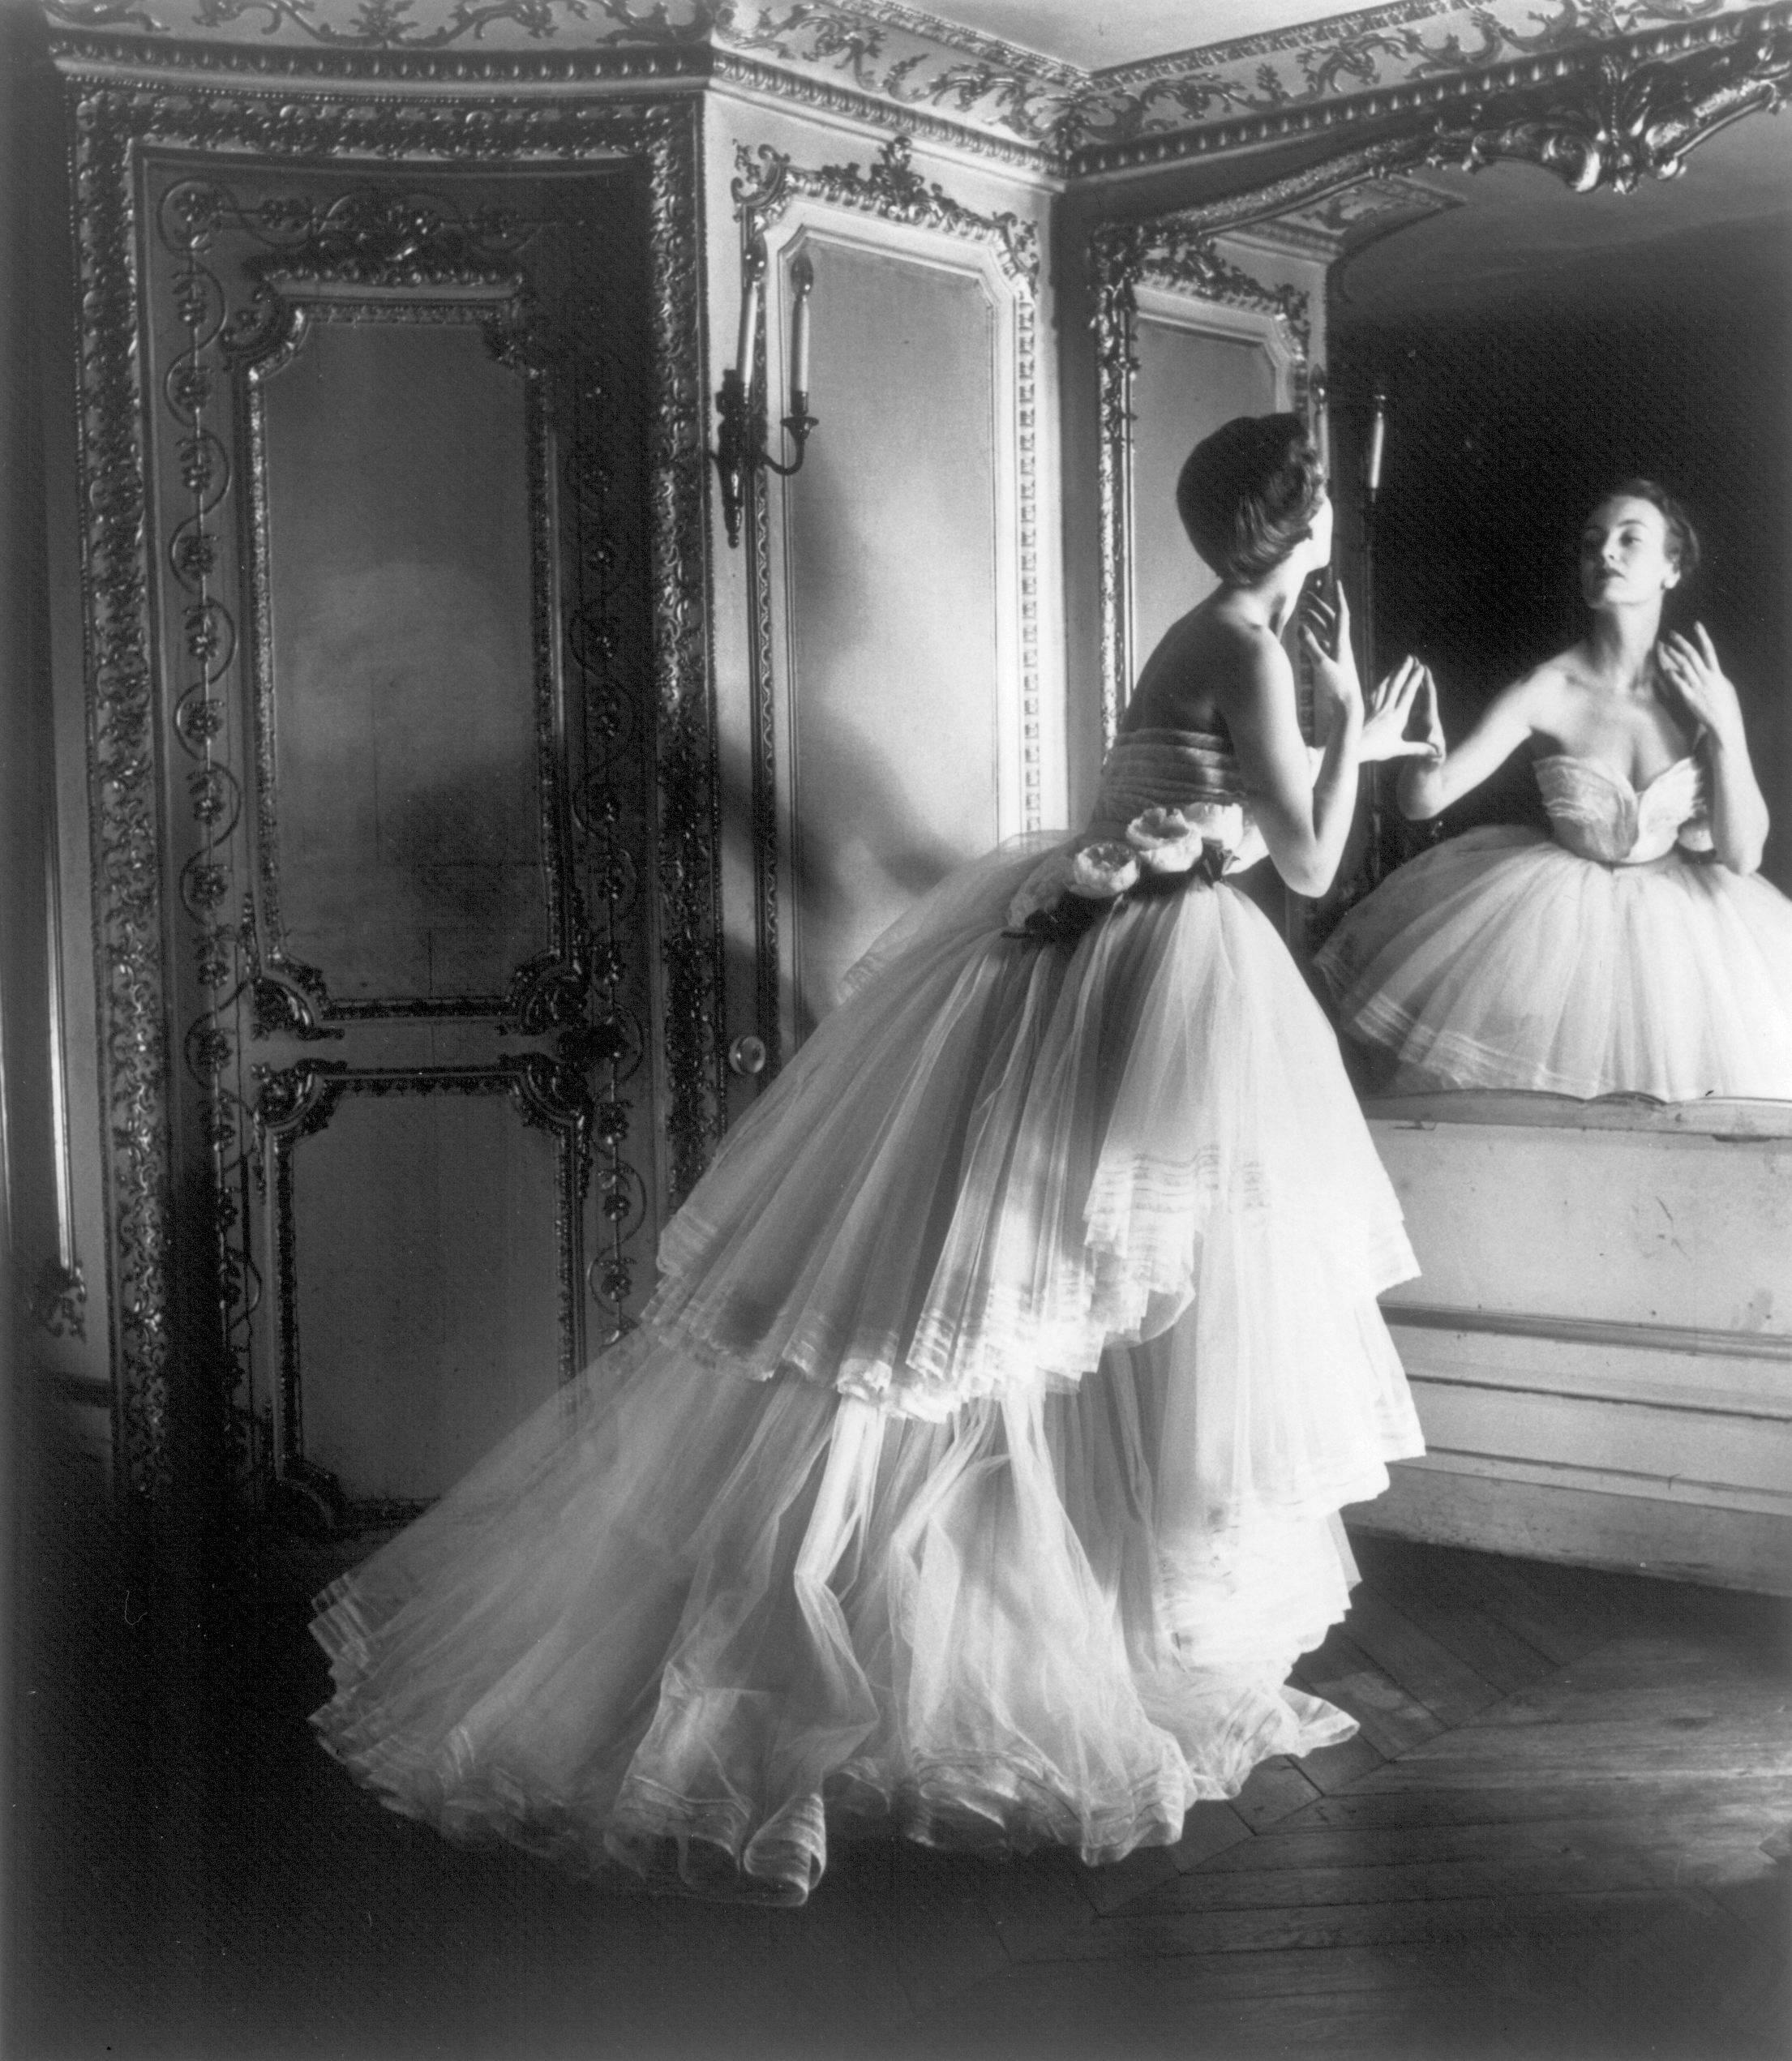 Louise Dahl-Wolfe Black and White Photograph - Dior Ballgown, Paris